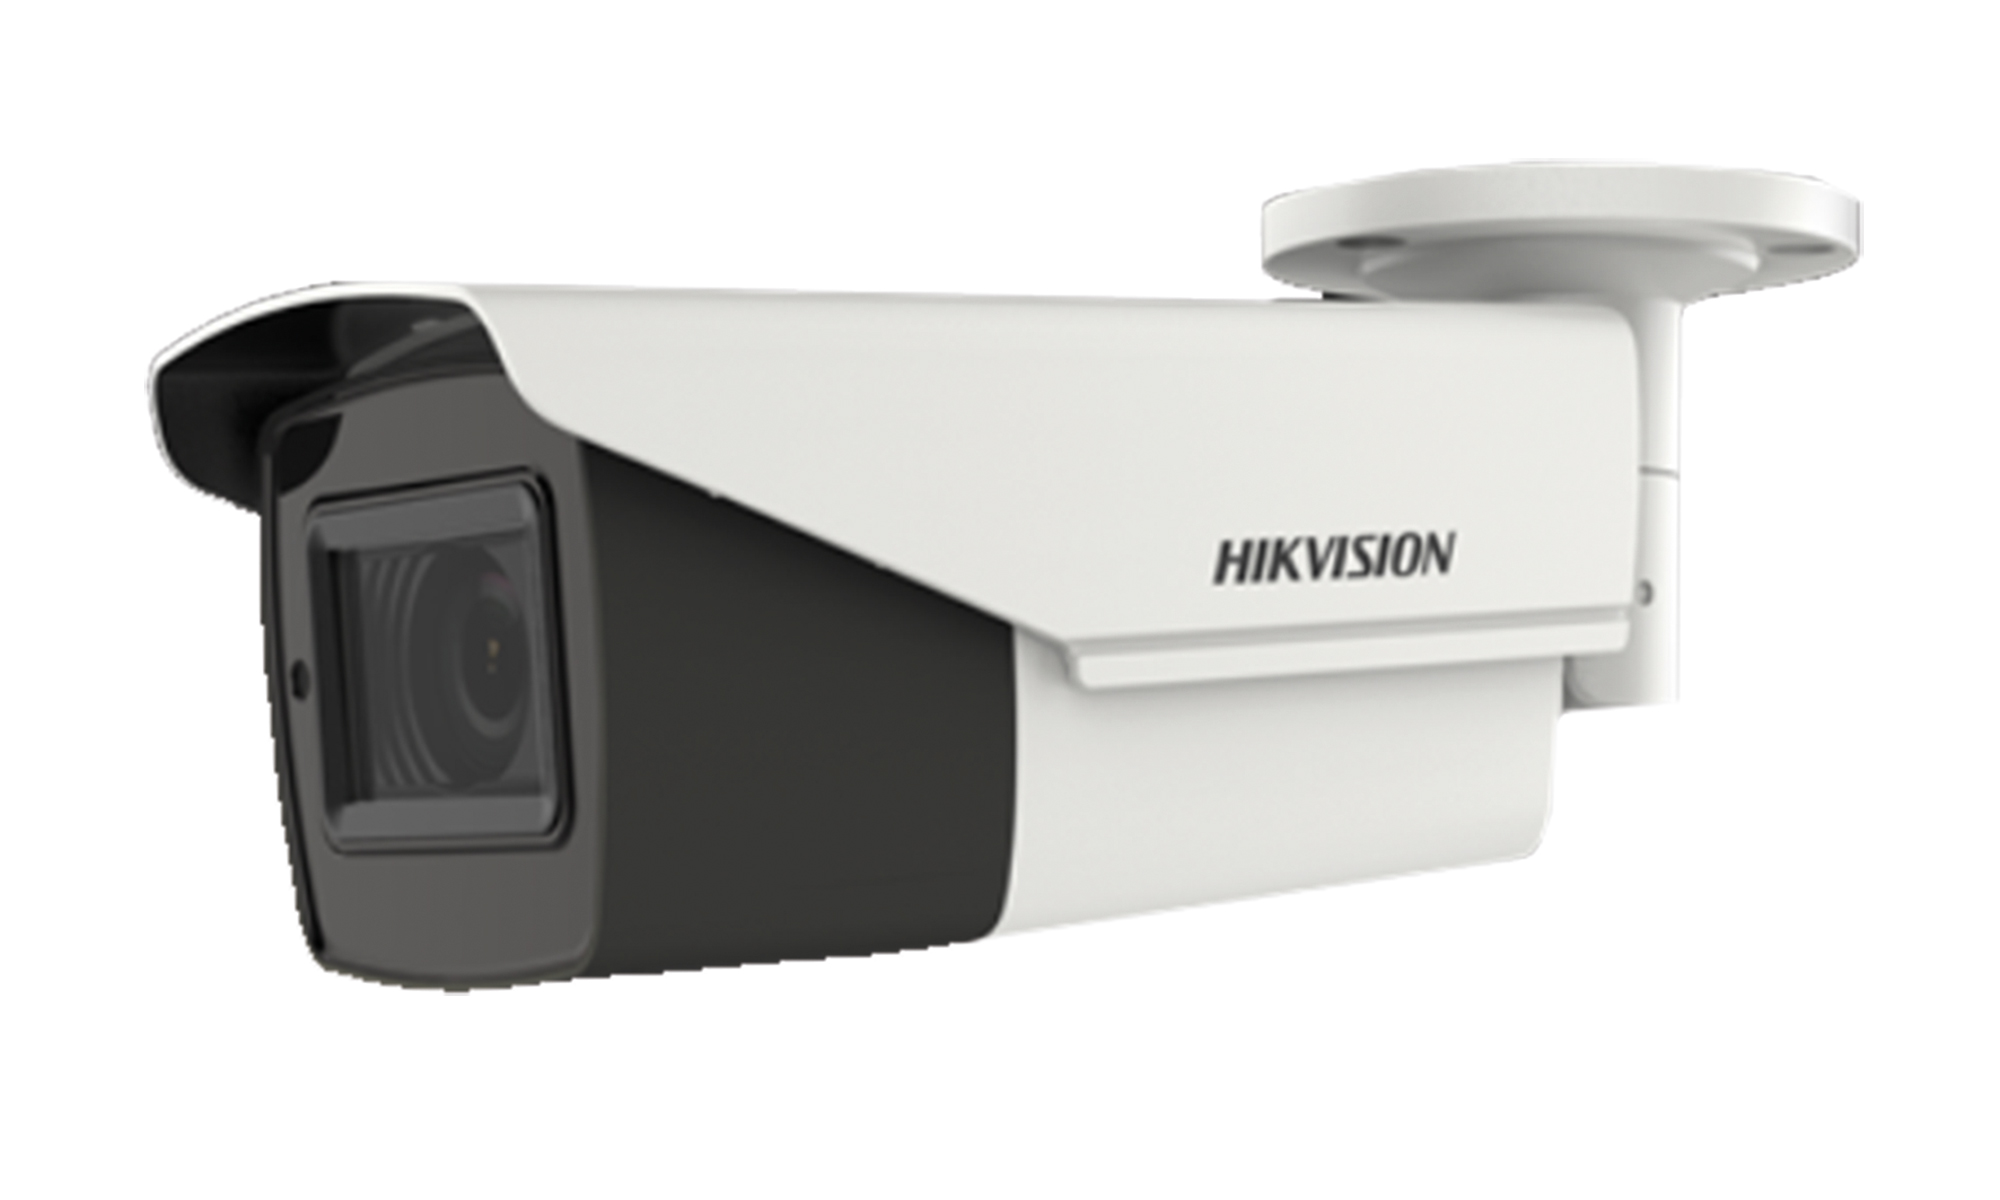 300203 Hikvision Turbo 4.0 8MP Ultra Low Light Bullet varifocale camera, 2.7-13.5mm